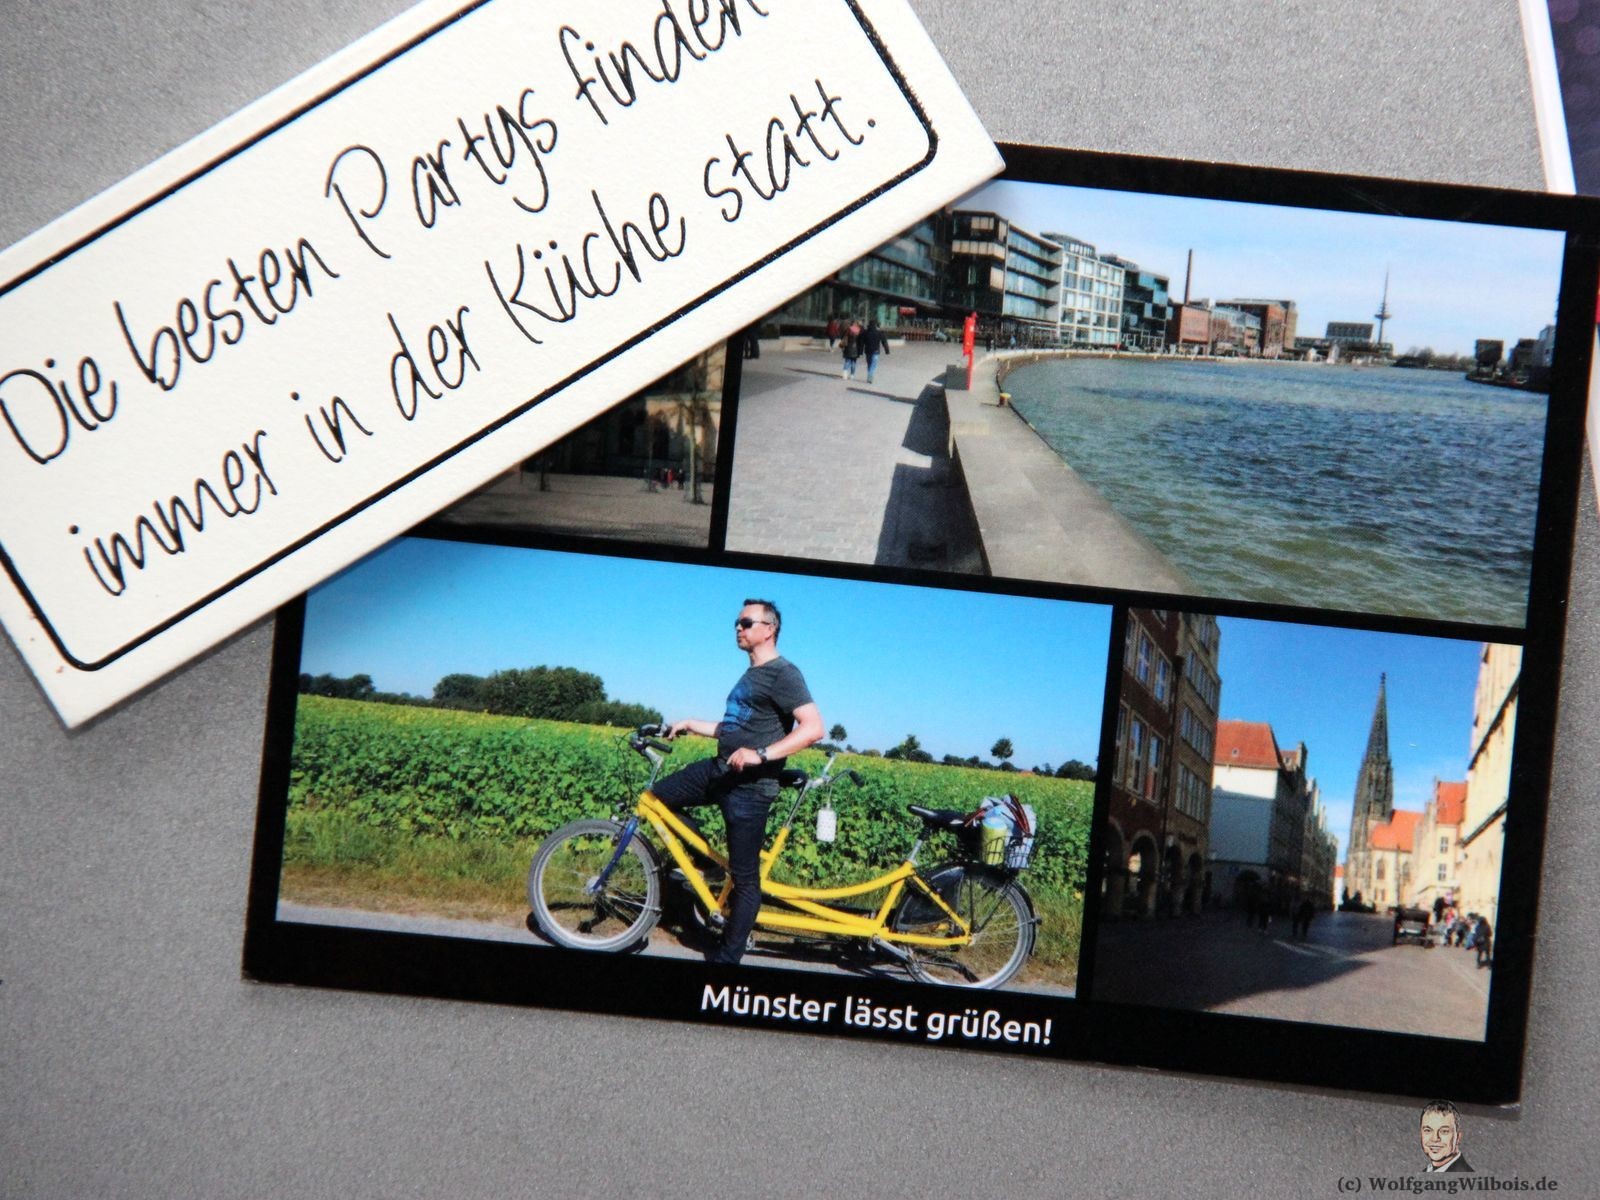 MyPostcard Kuehlschrank App Postkarten online bestellen